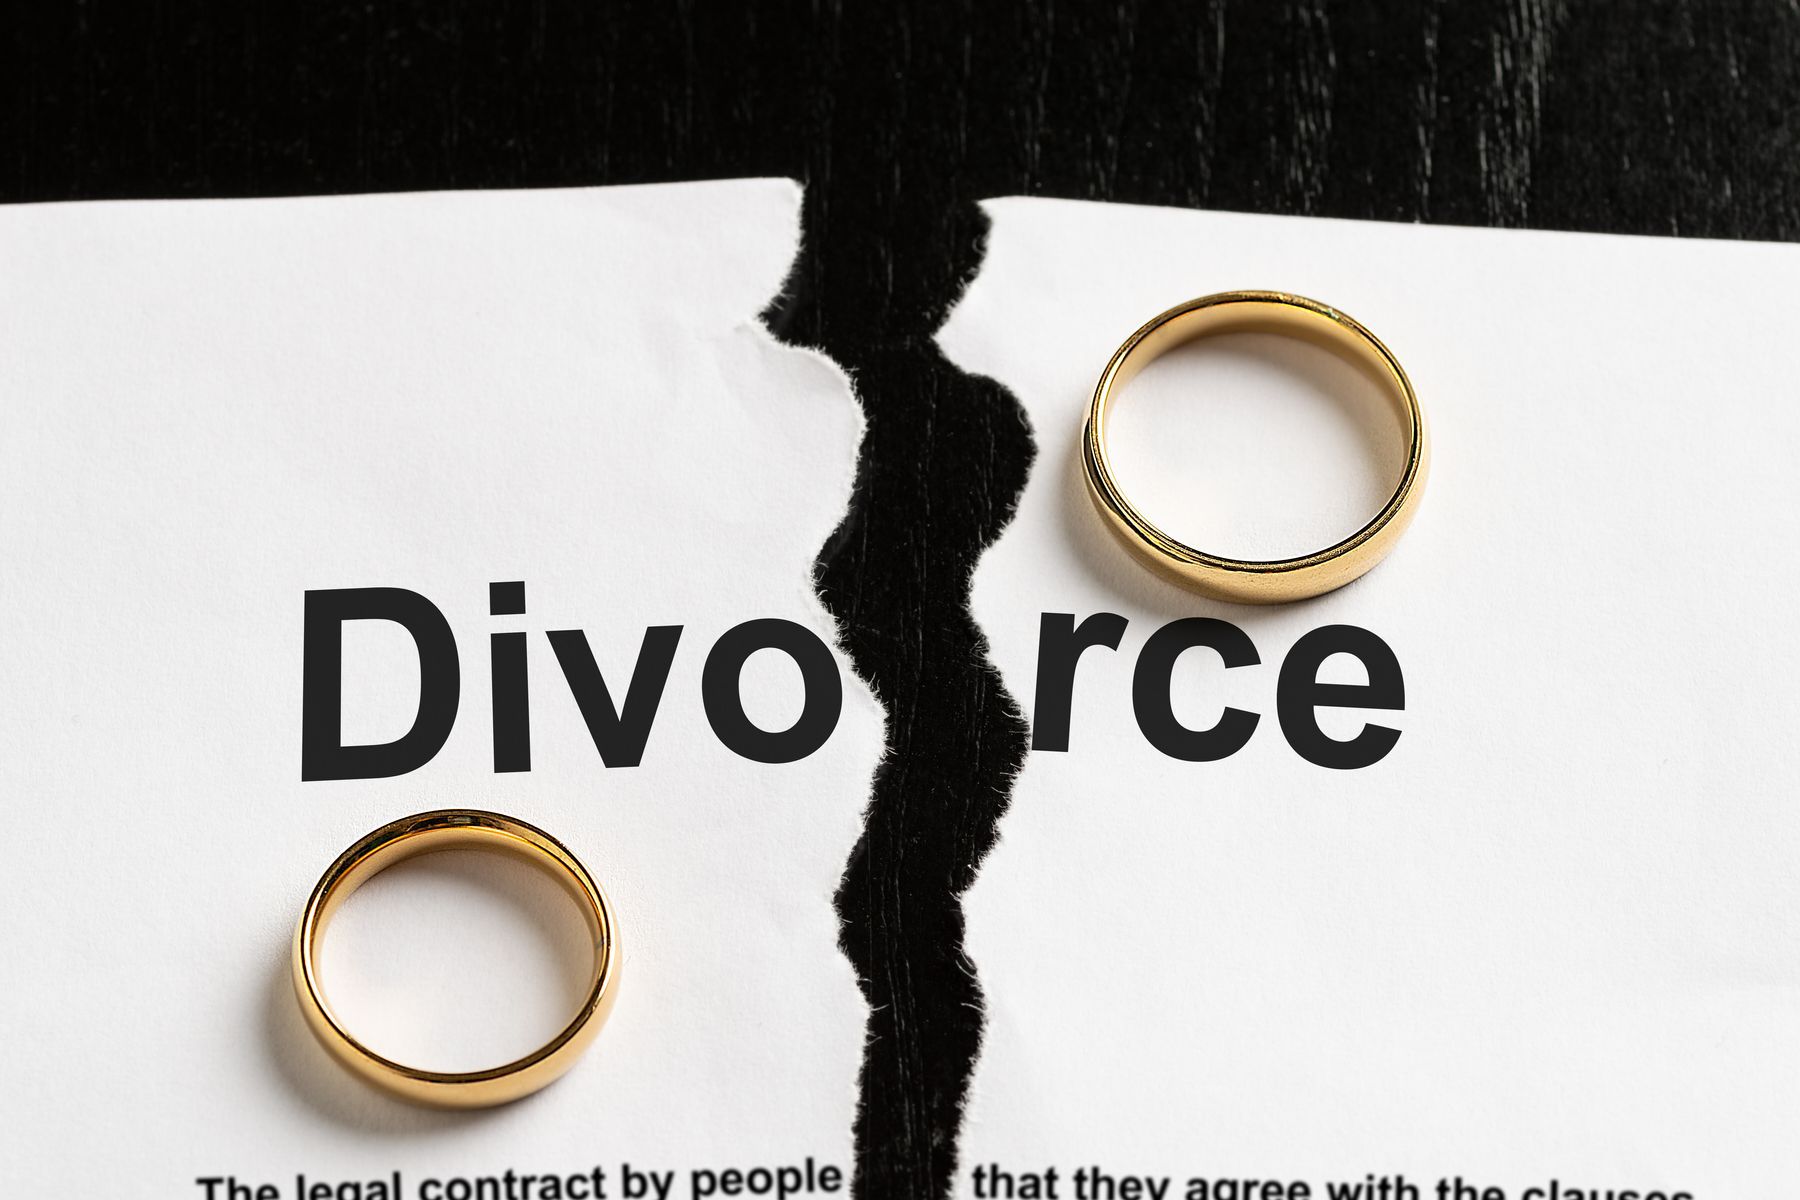 divorce and wedding rings